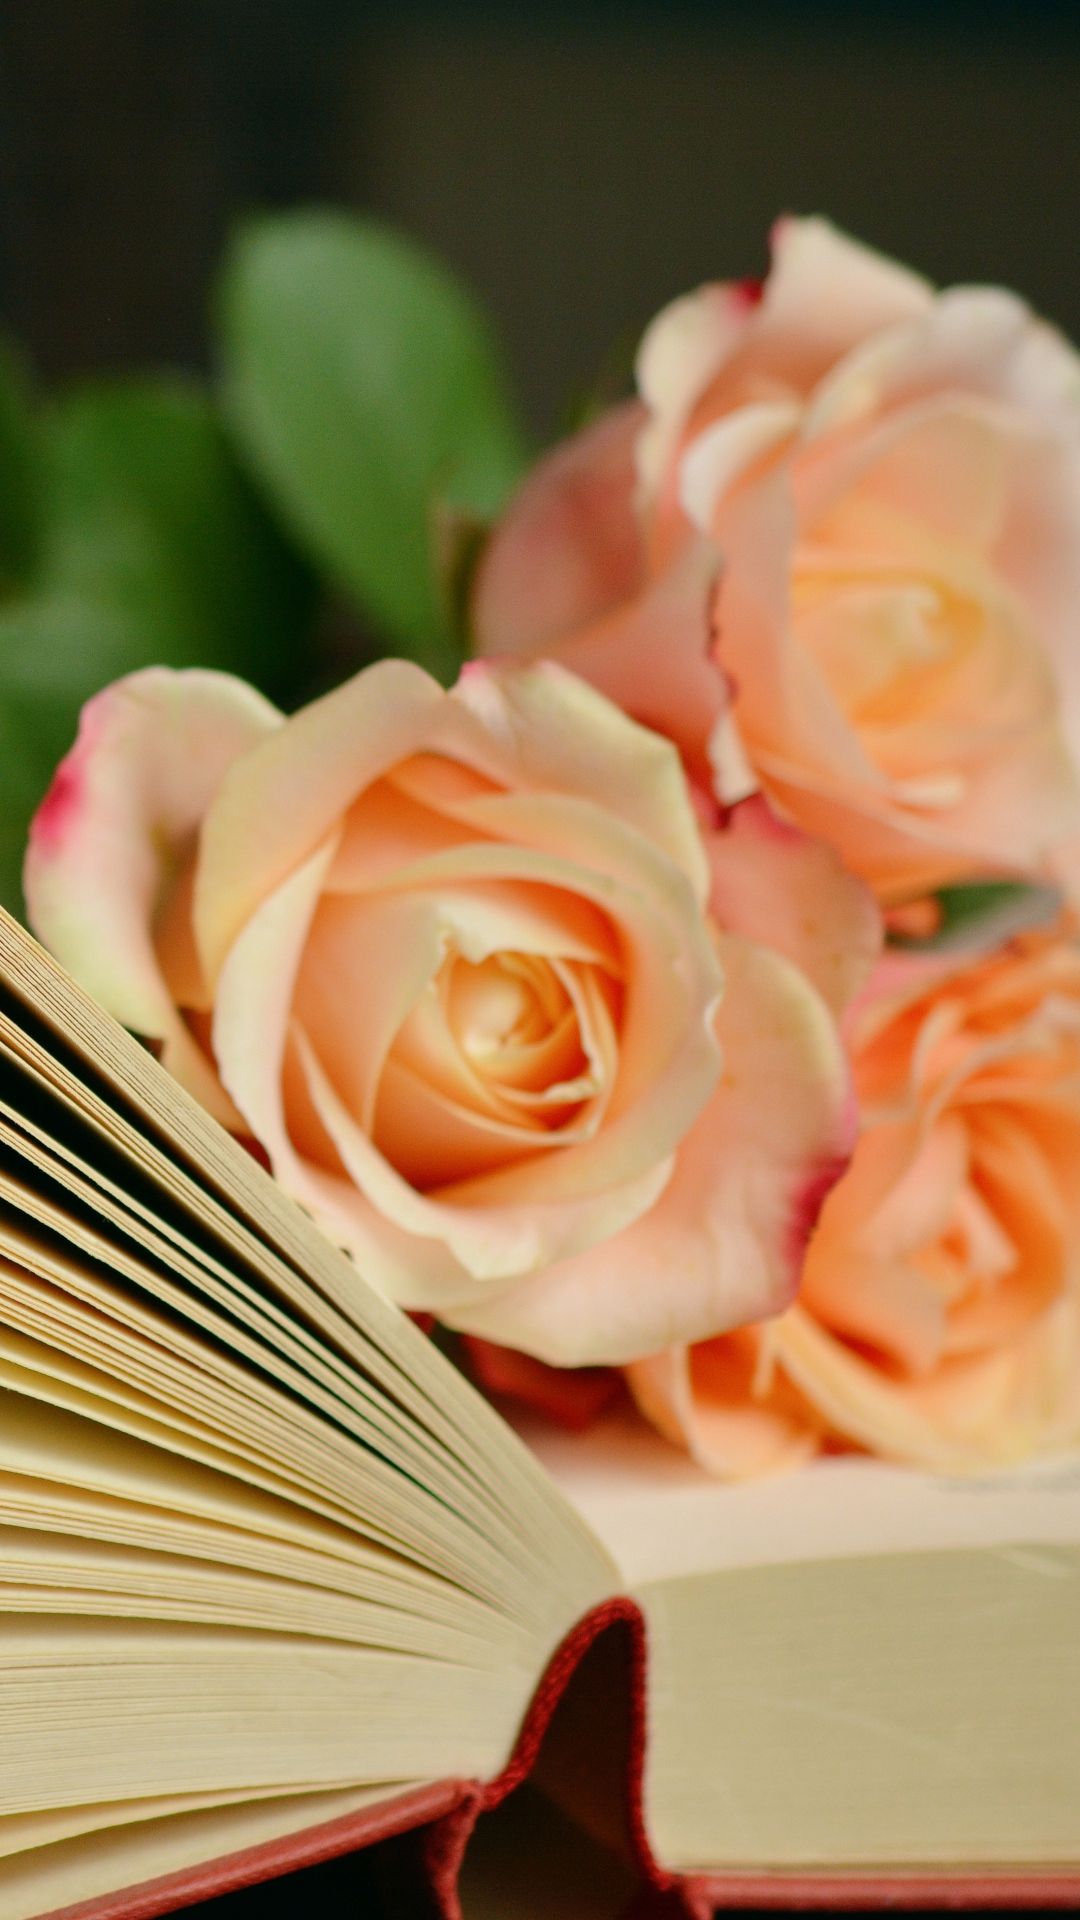 Book Roses Bouquet Reading iPhone Plus Wallpaper Rose